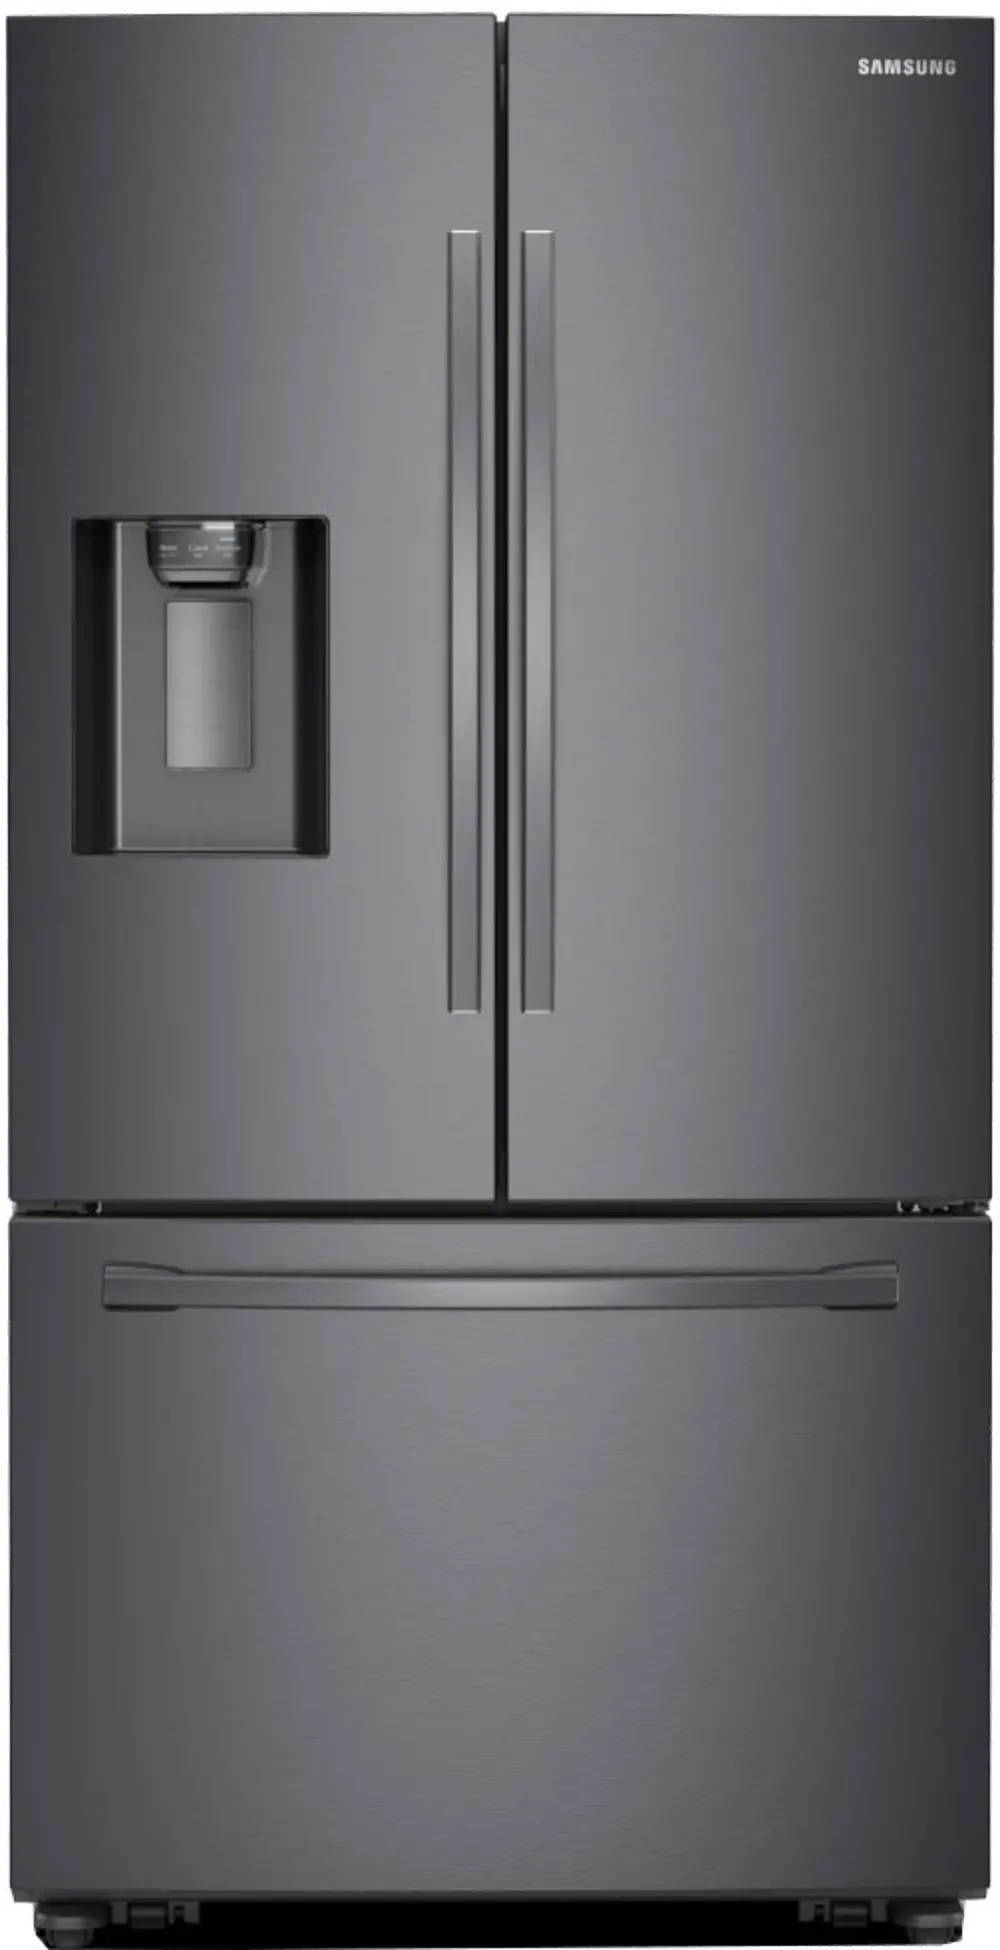 RF28R6201SG Samsung 28 cu ft French Door Refrigerator - Black Stainless Steel-1